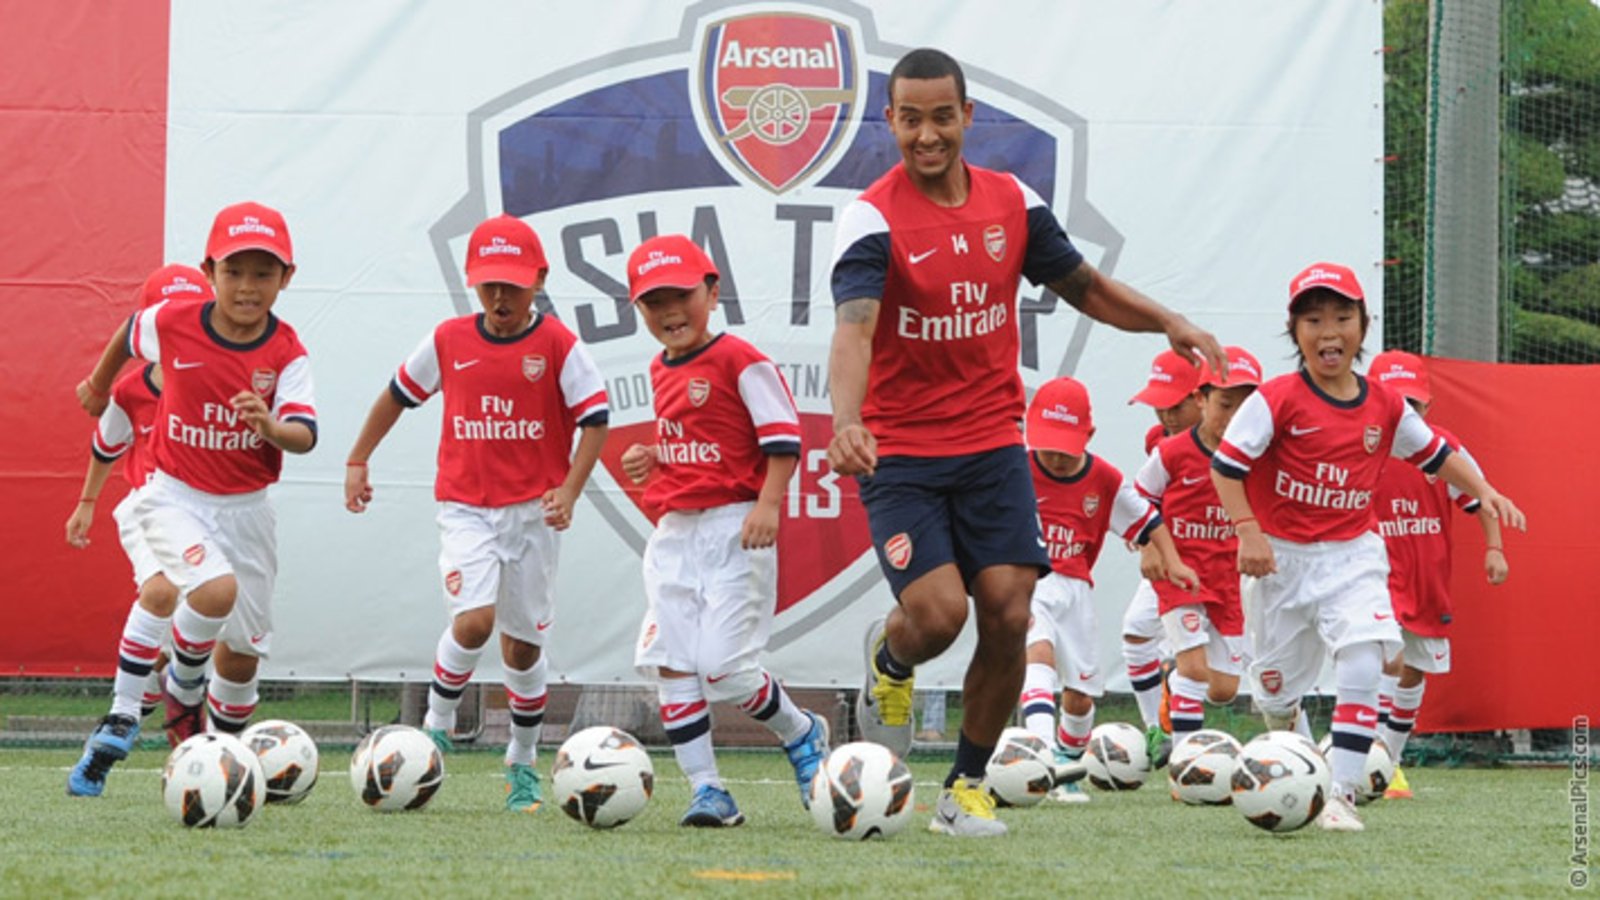 Emirates Soccer Clinic in Saitama | News | Arsenal.com